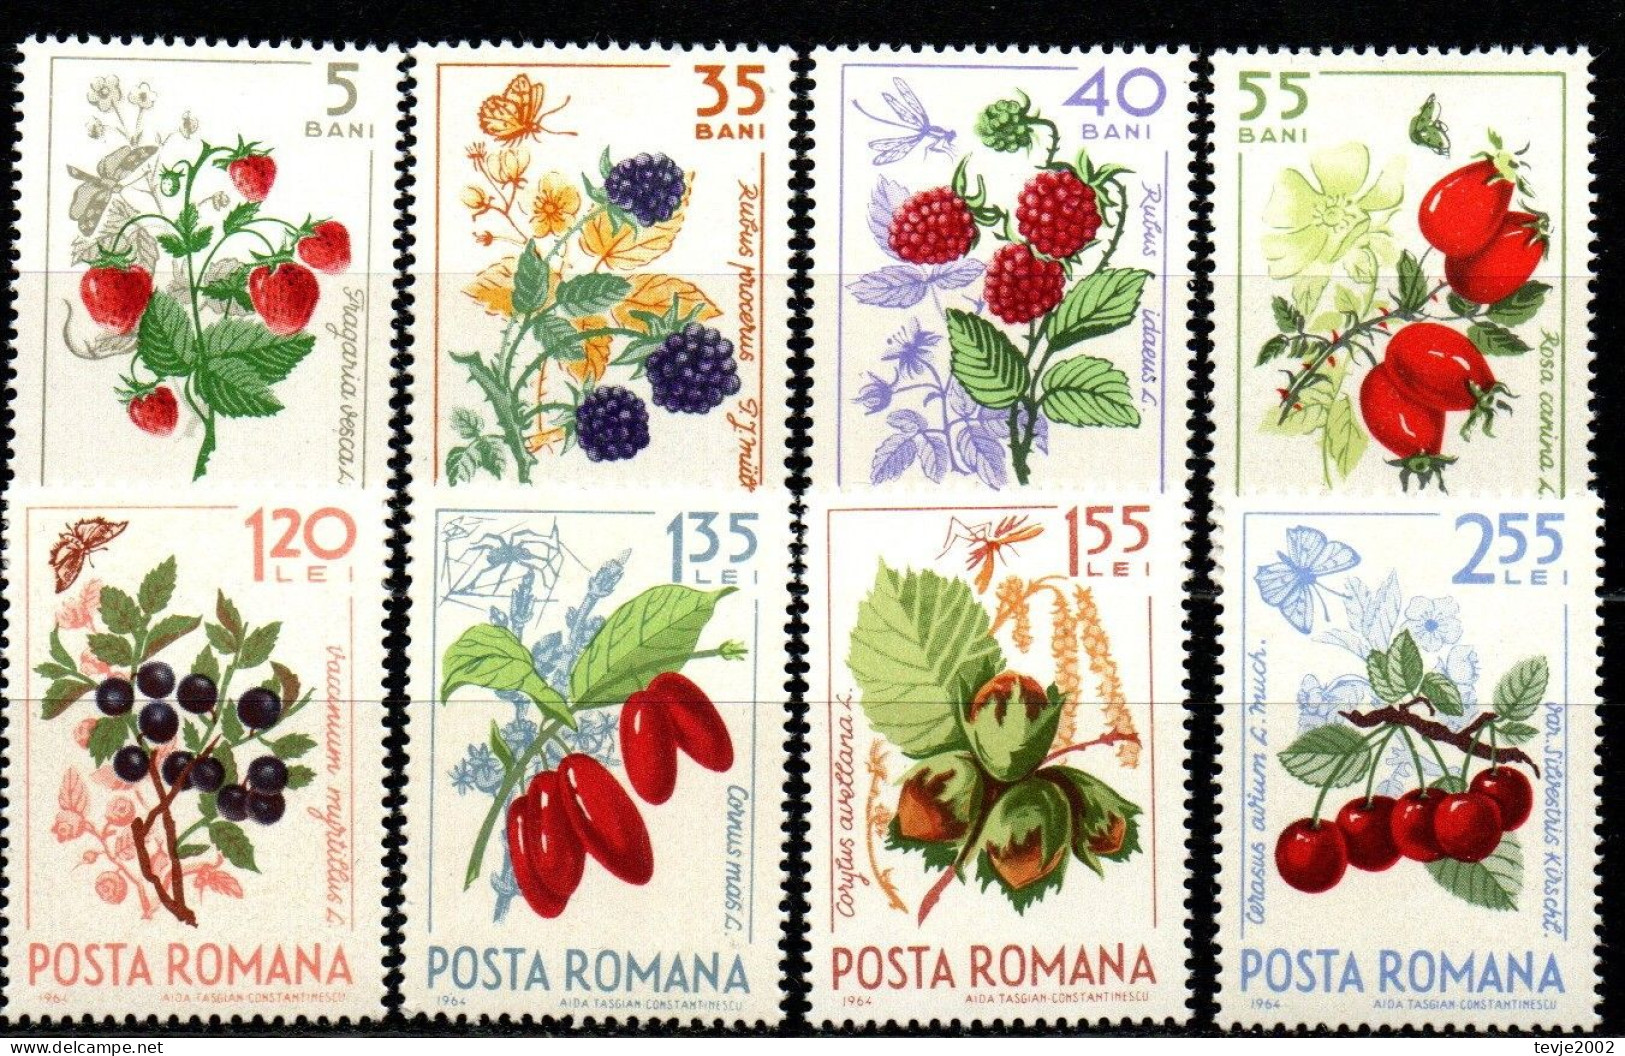 Rumänien 1964 - Mi.Nr. 2361 - 2368 - Postfrisch MNH - Früchte Fruits Beeren Berries - Frutas